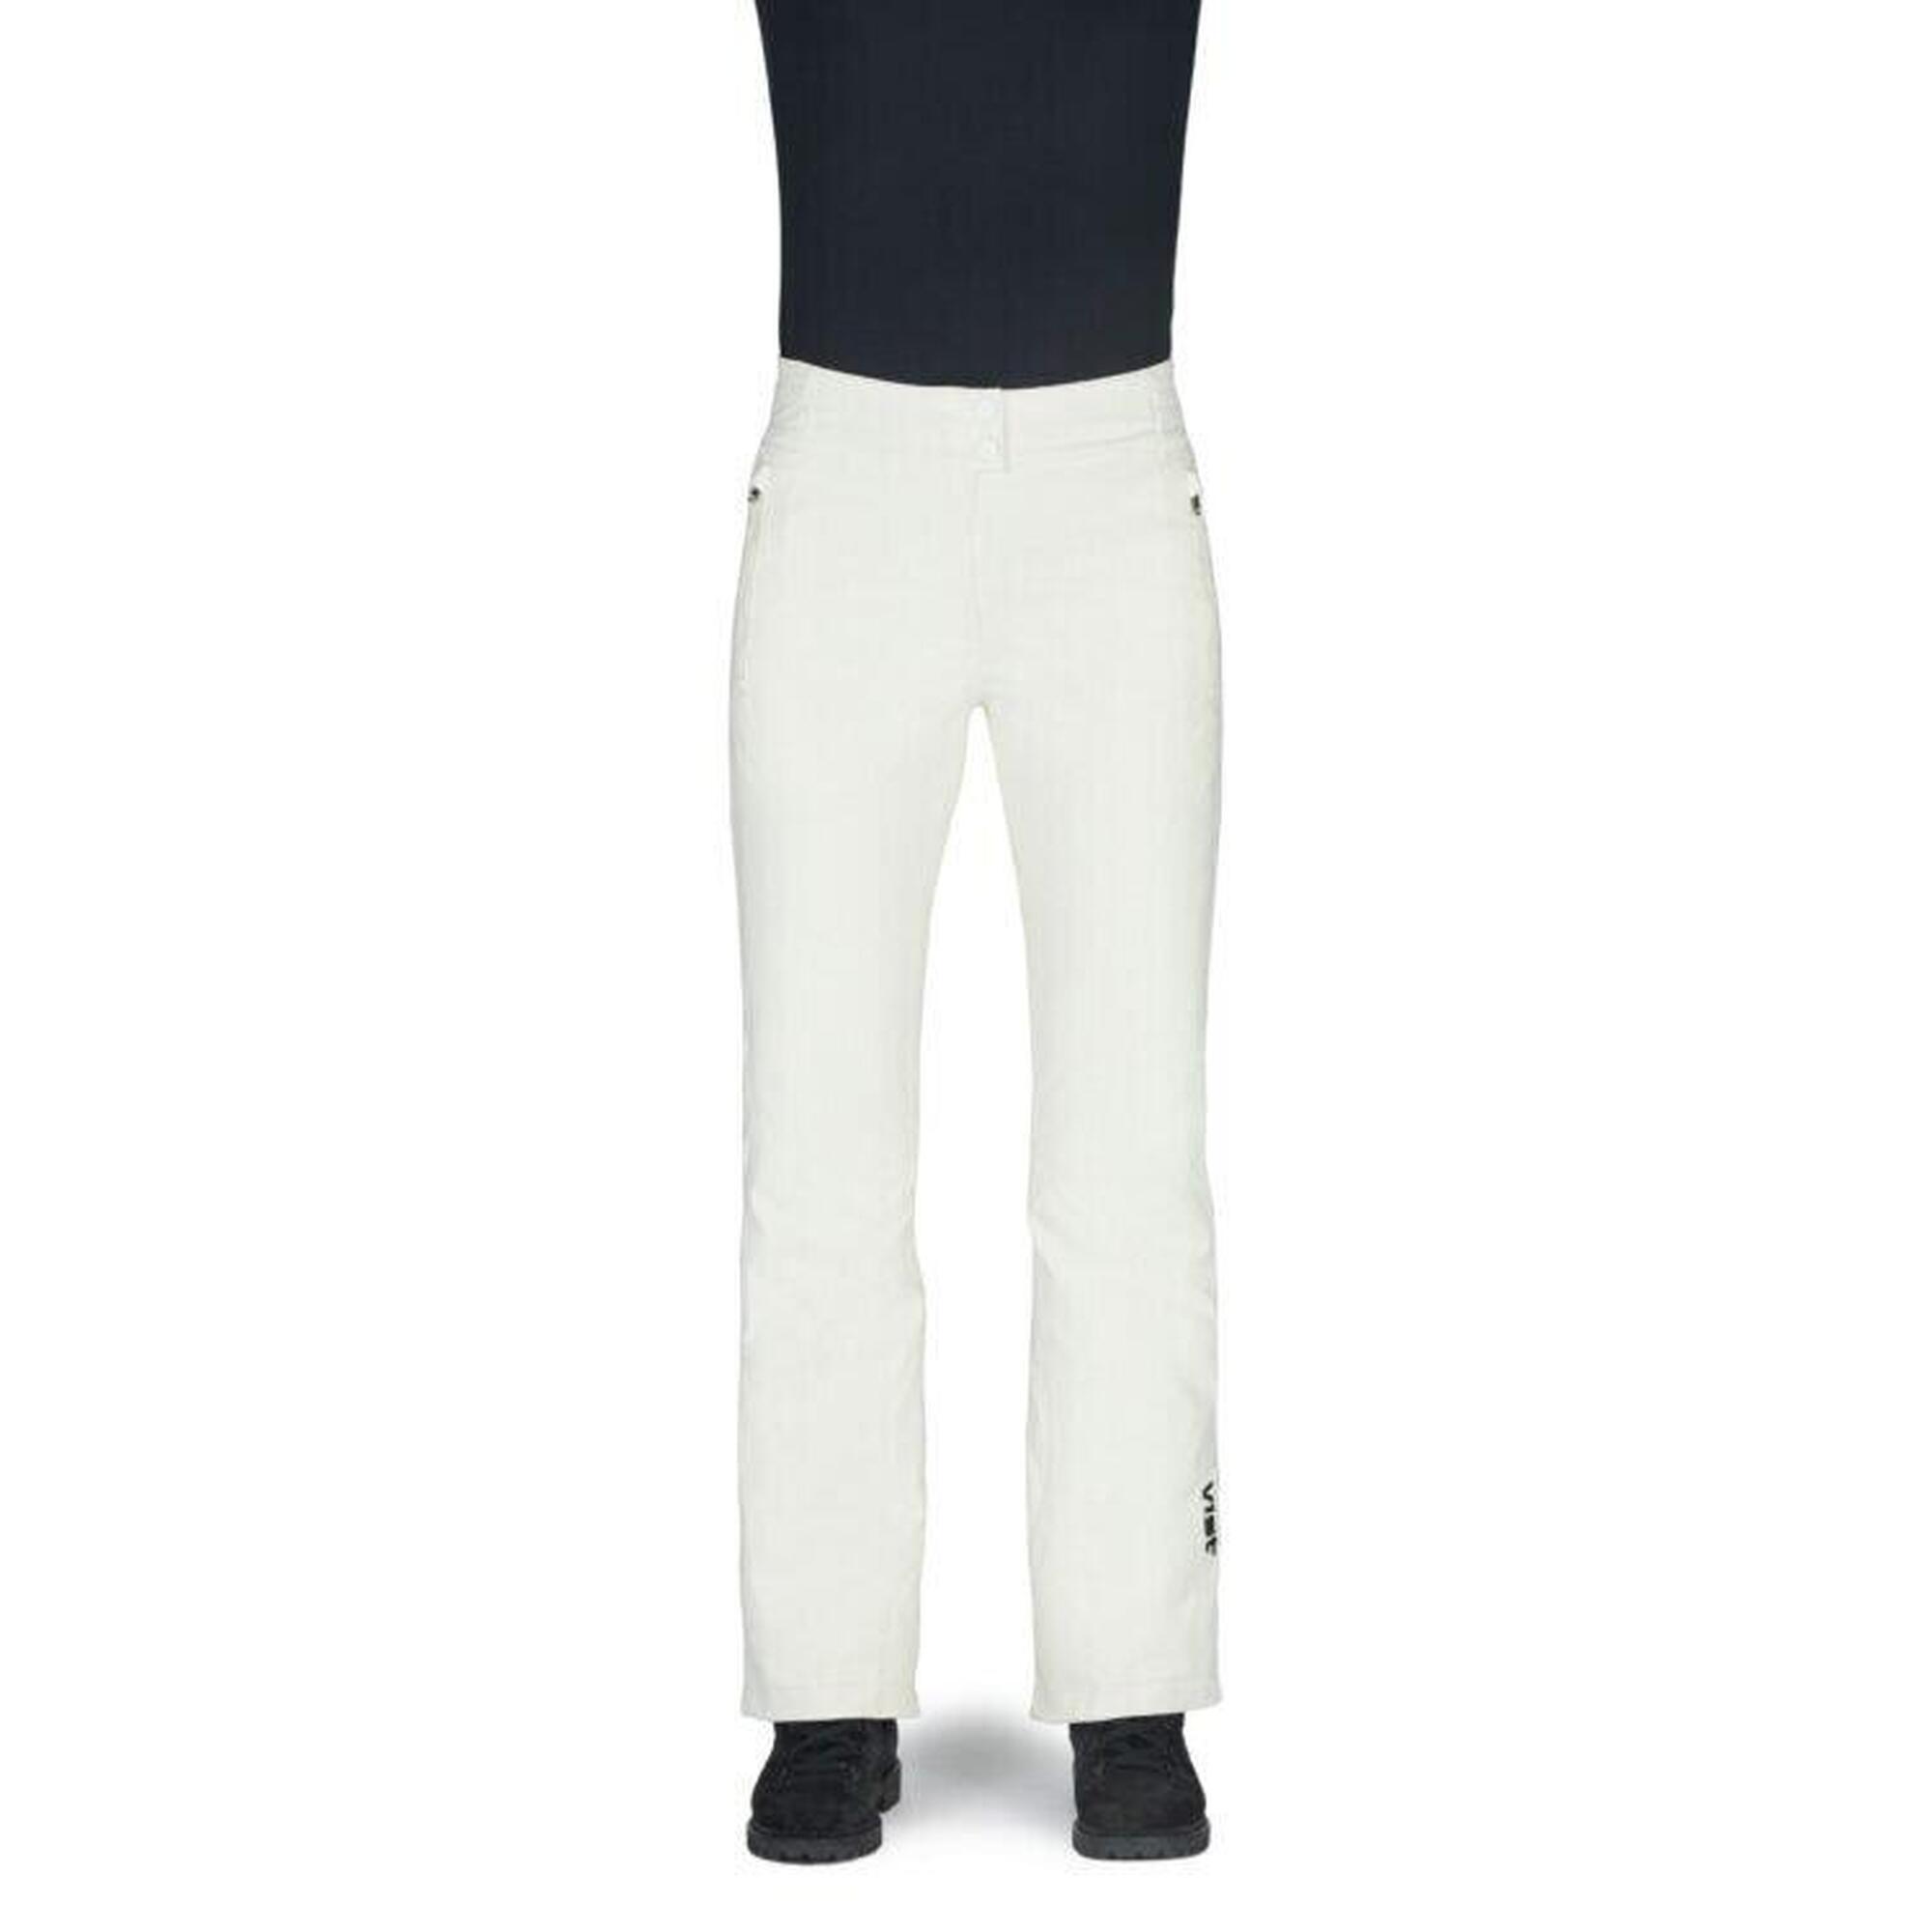 Donatella Women Ski Jacket(without fur) + Lavinia 1920 Women Ski Pants - White